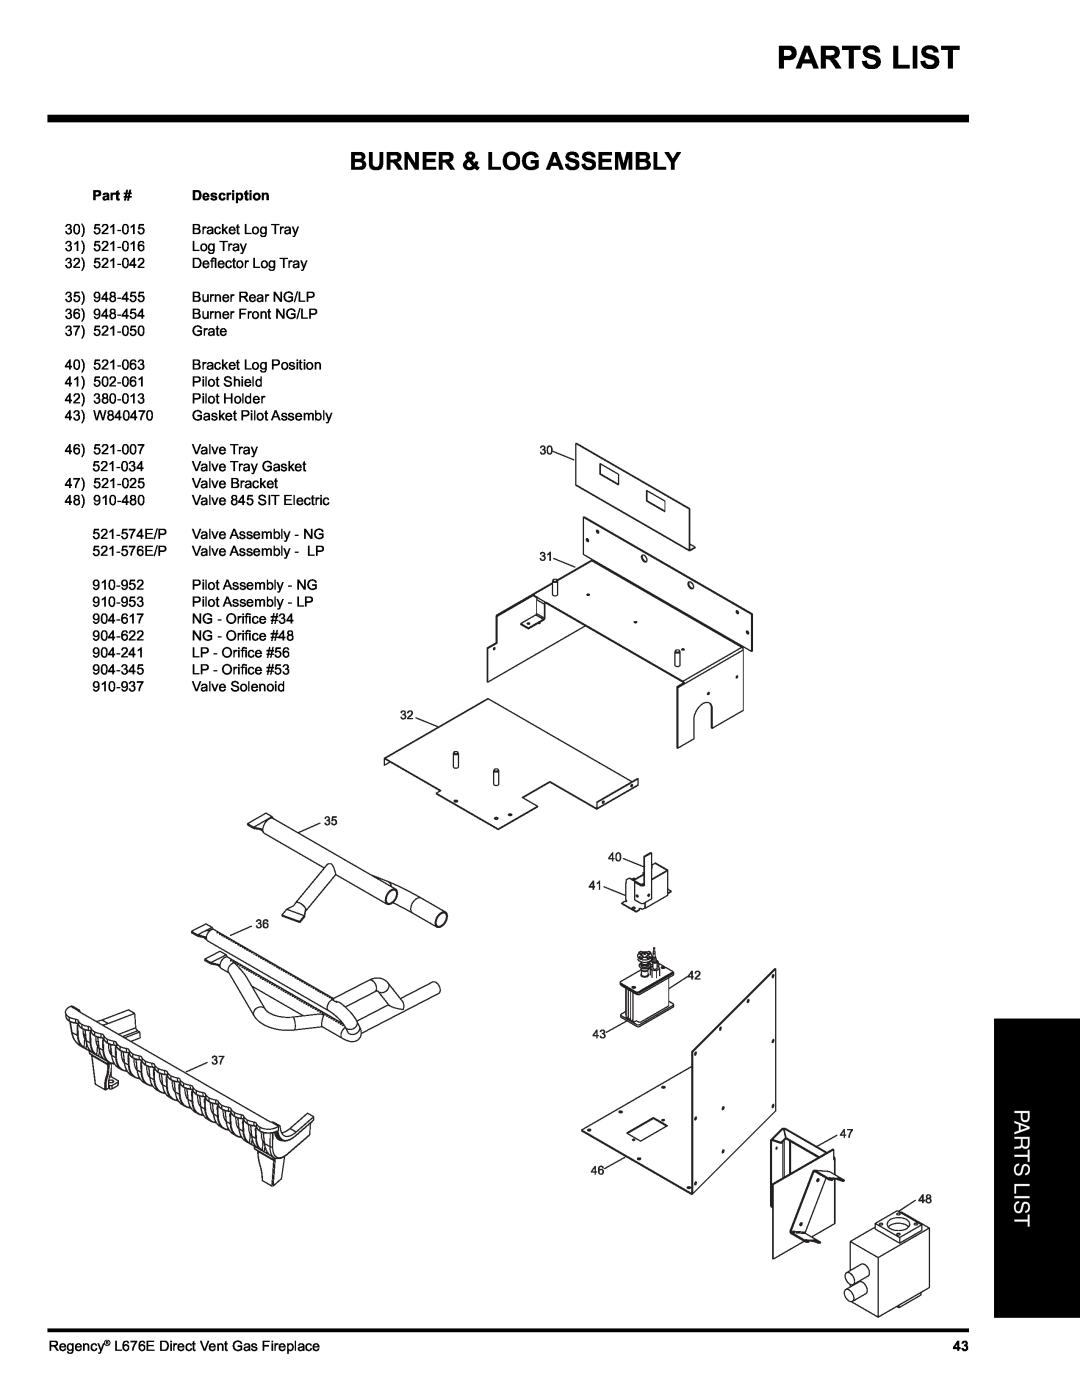 Regency L676E-NG, L676E-LP installation manual Parts List, Burner & Log Assembly, Description 